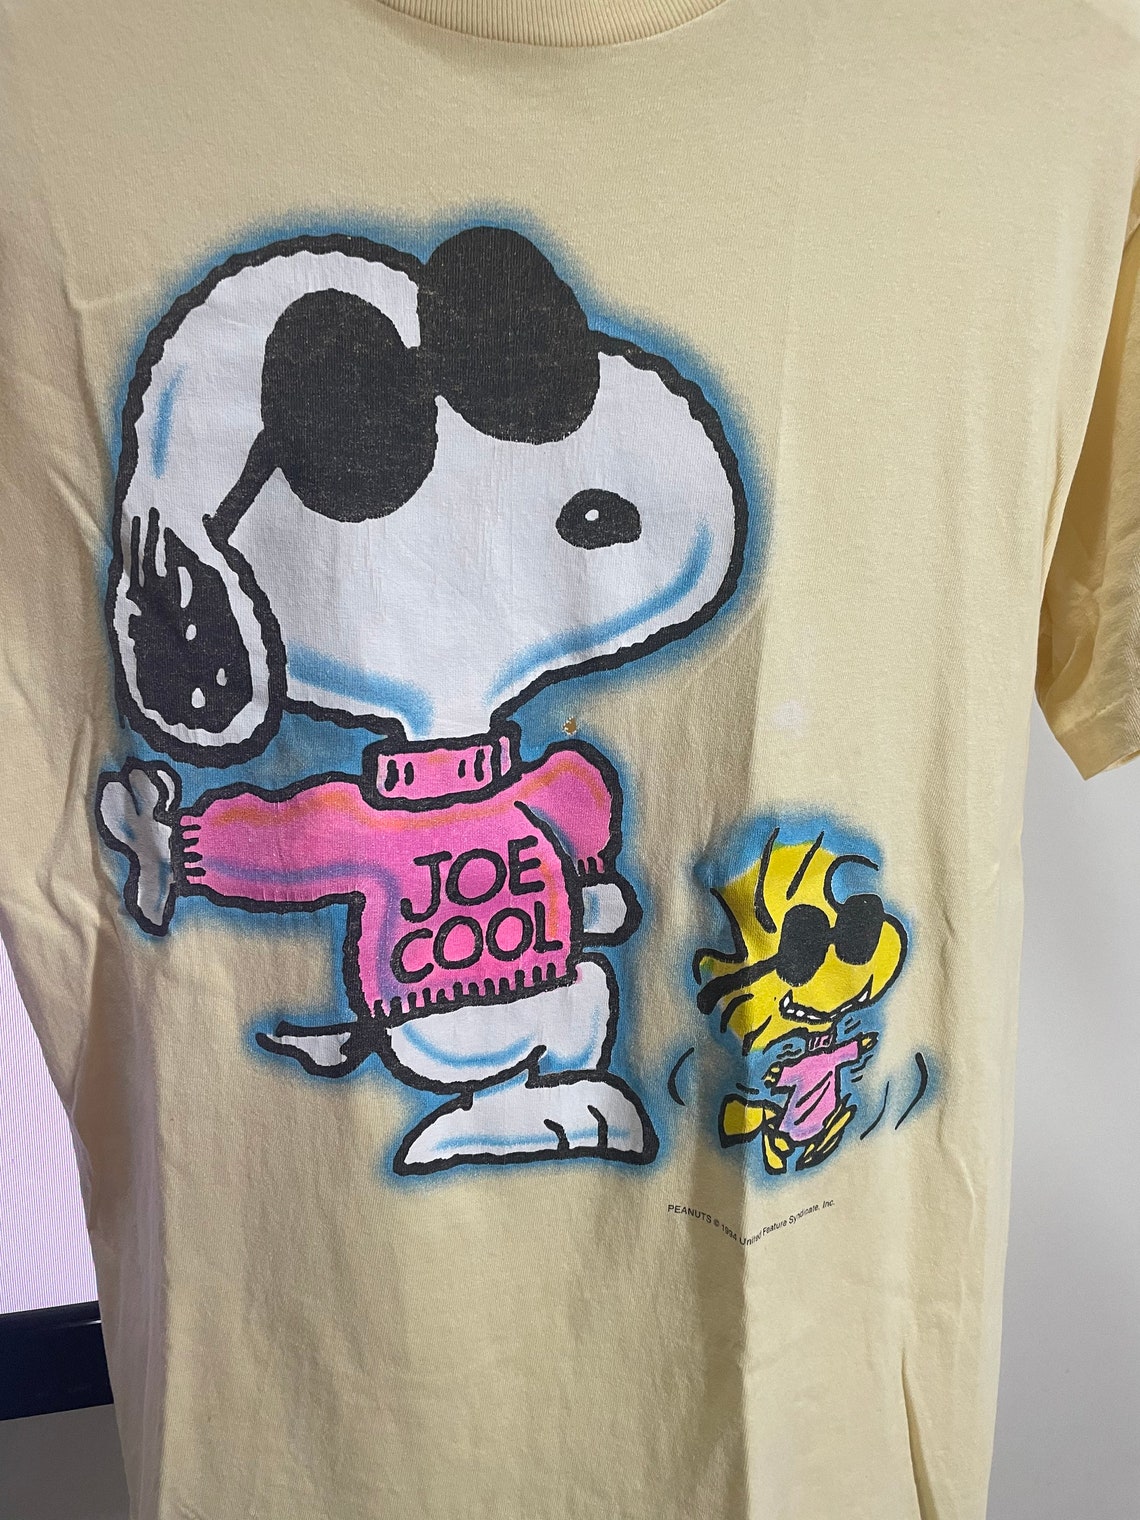 Snoopy joe cool vintage tshirt | Etsy